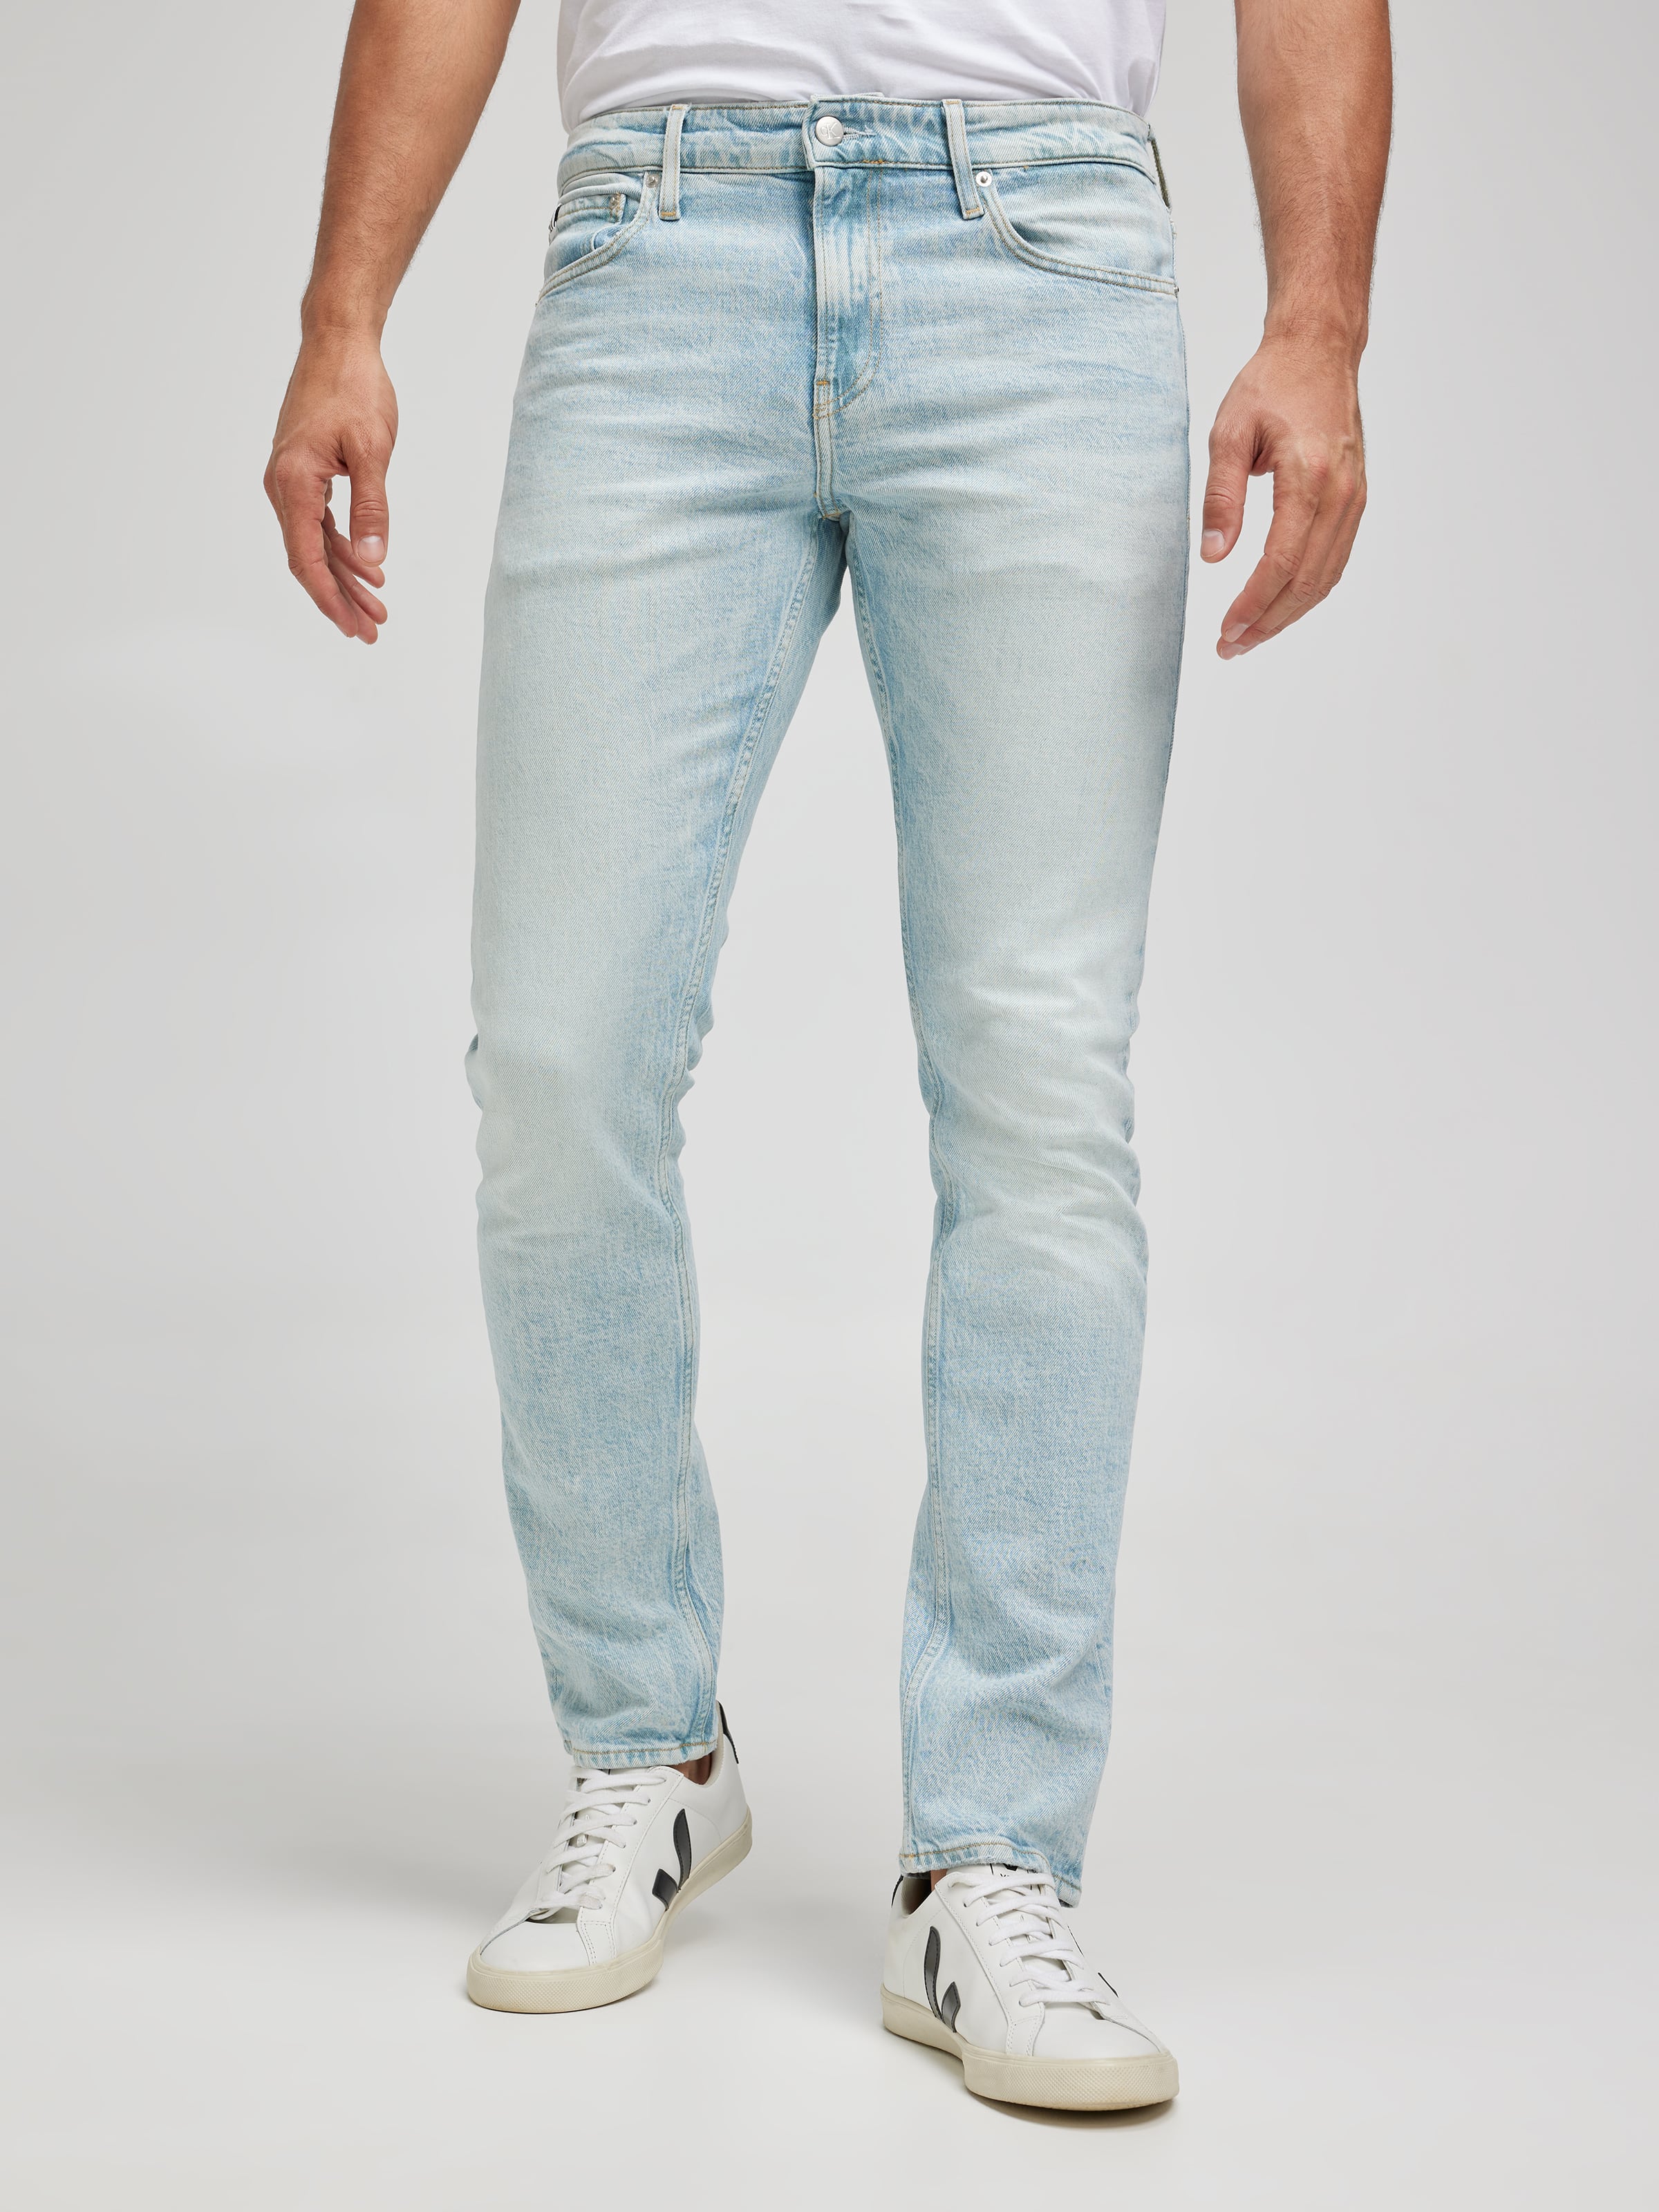 Men's Light Wash Denim & Jeans